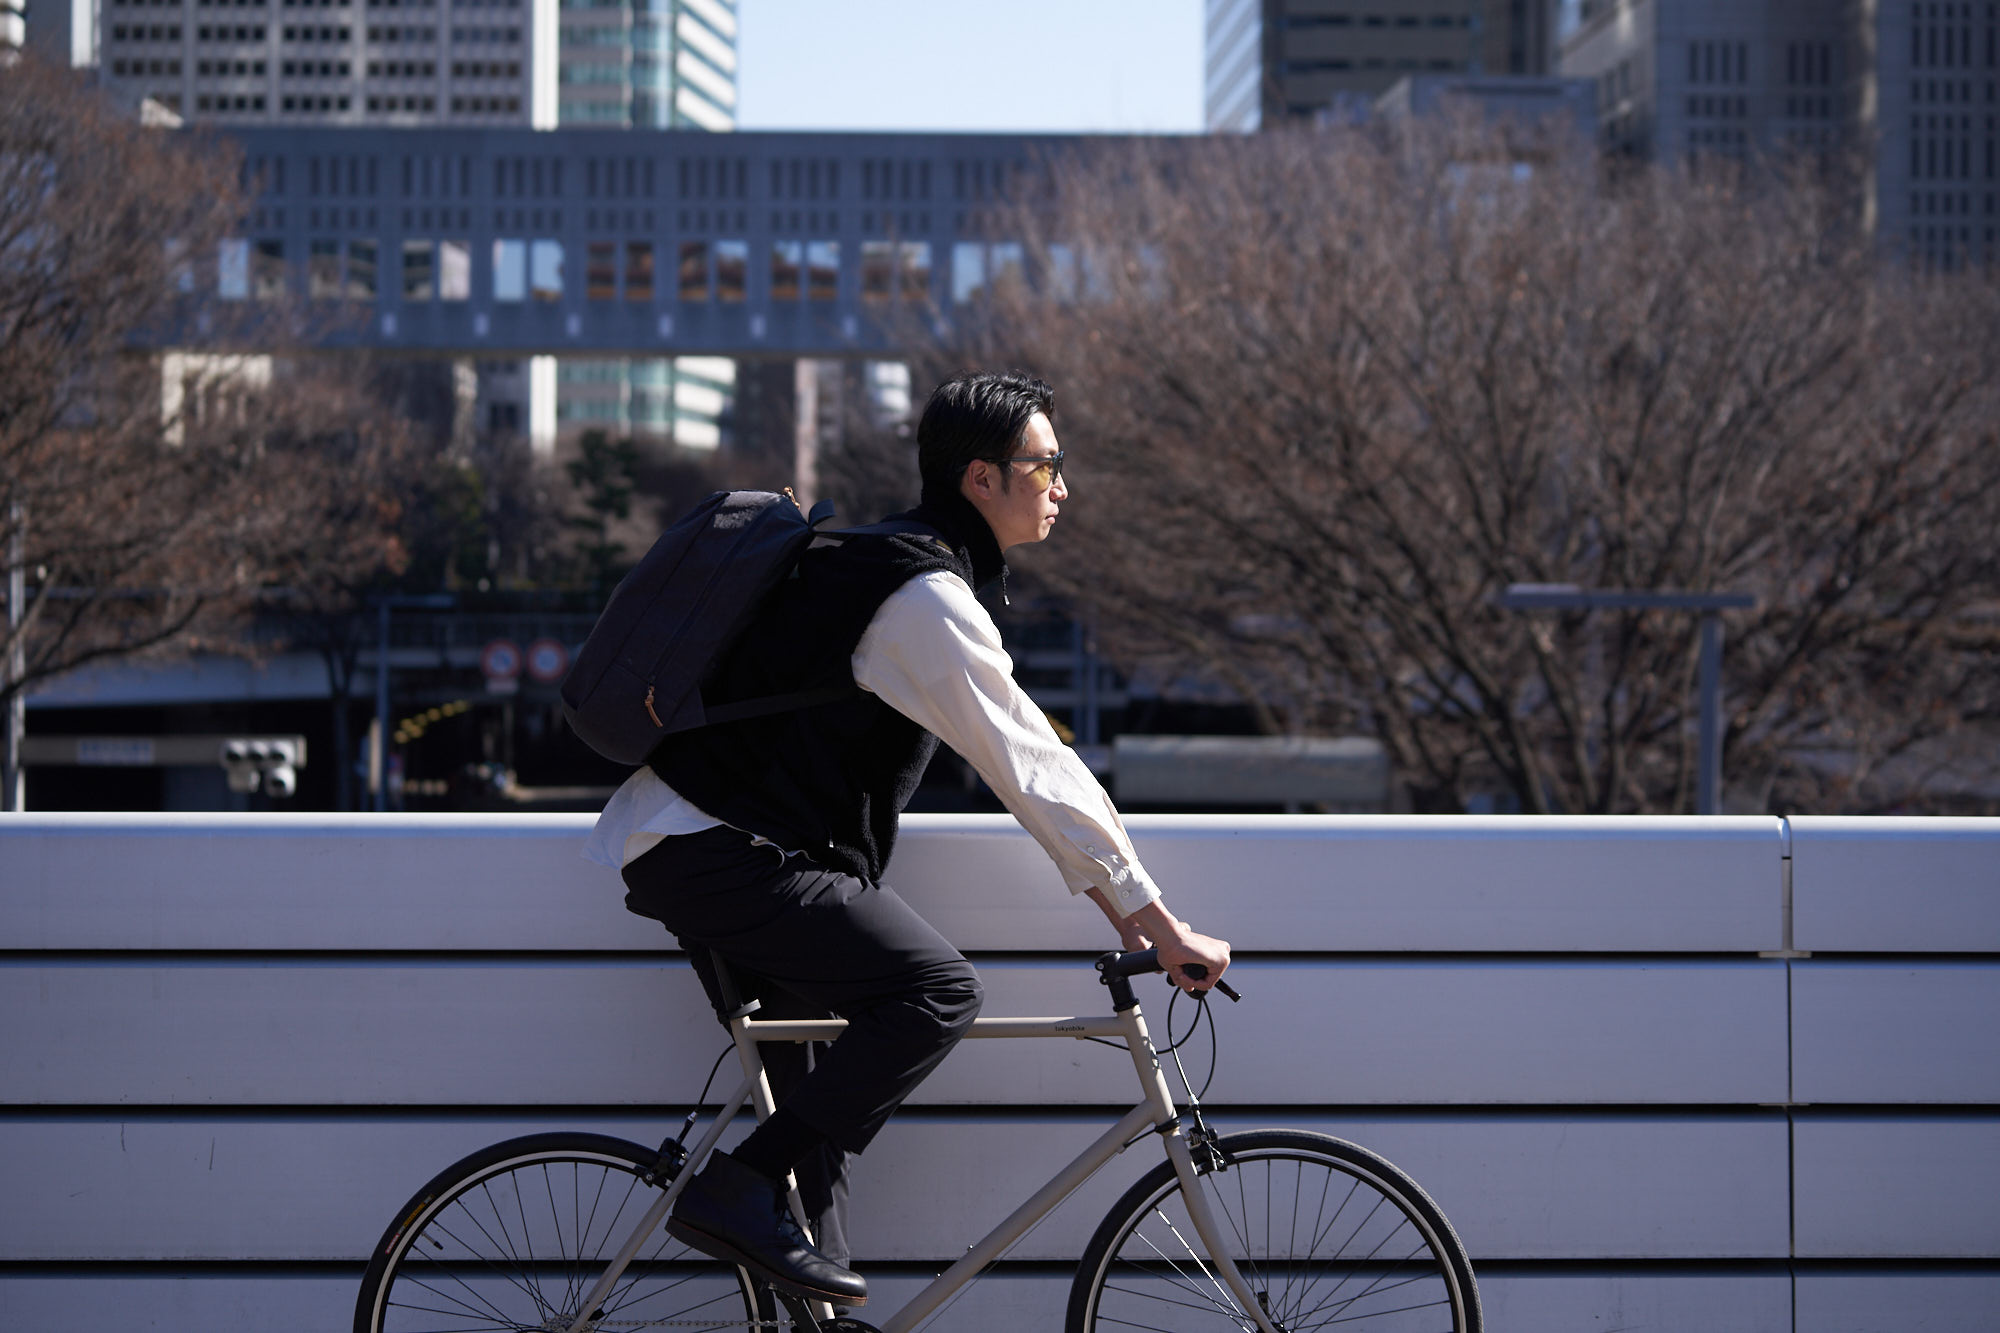 TOKYOBIKE SPORT 9s クロスバイク 自転車本体 自転車 スポーツ・レジャー 激安/新作